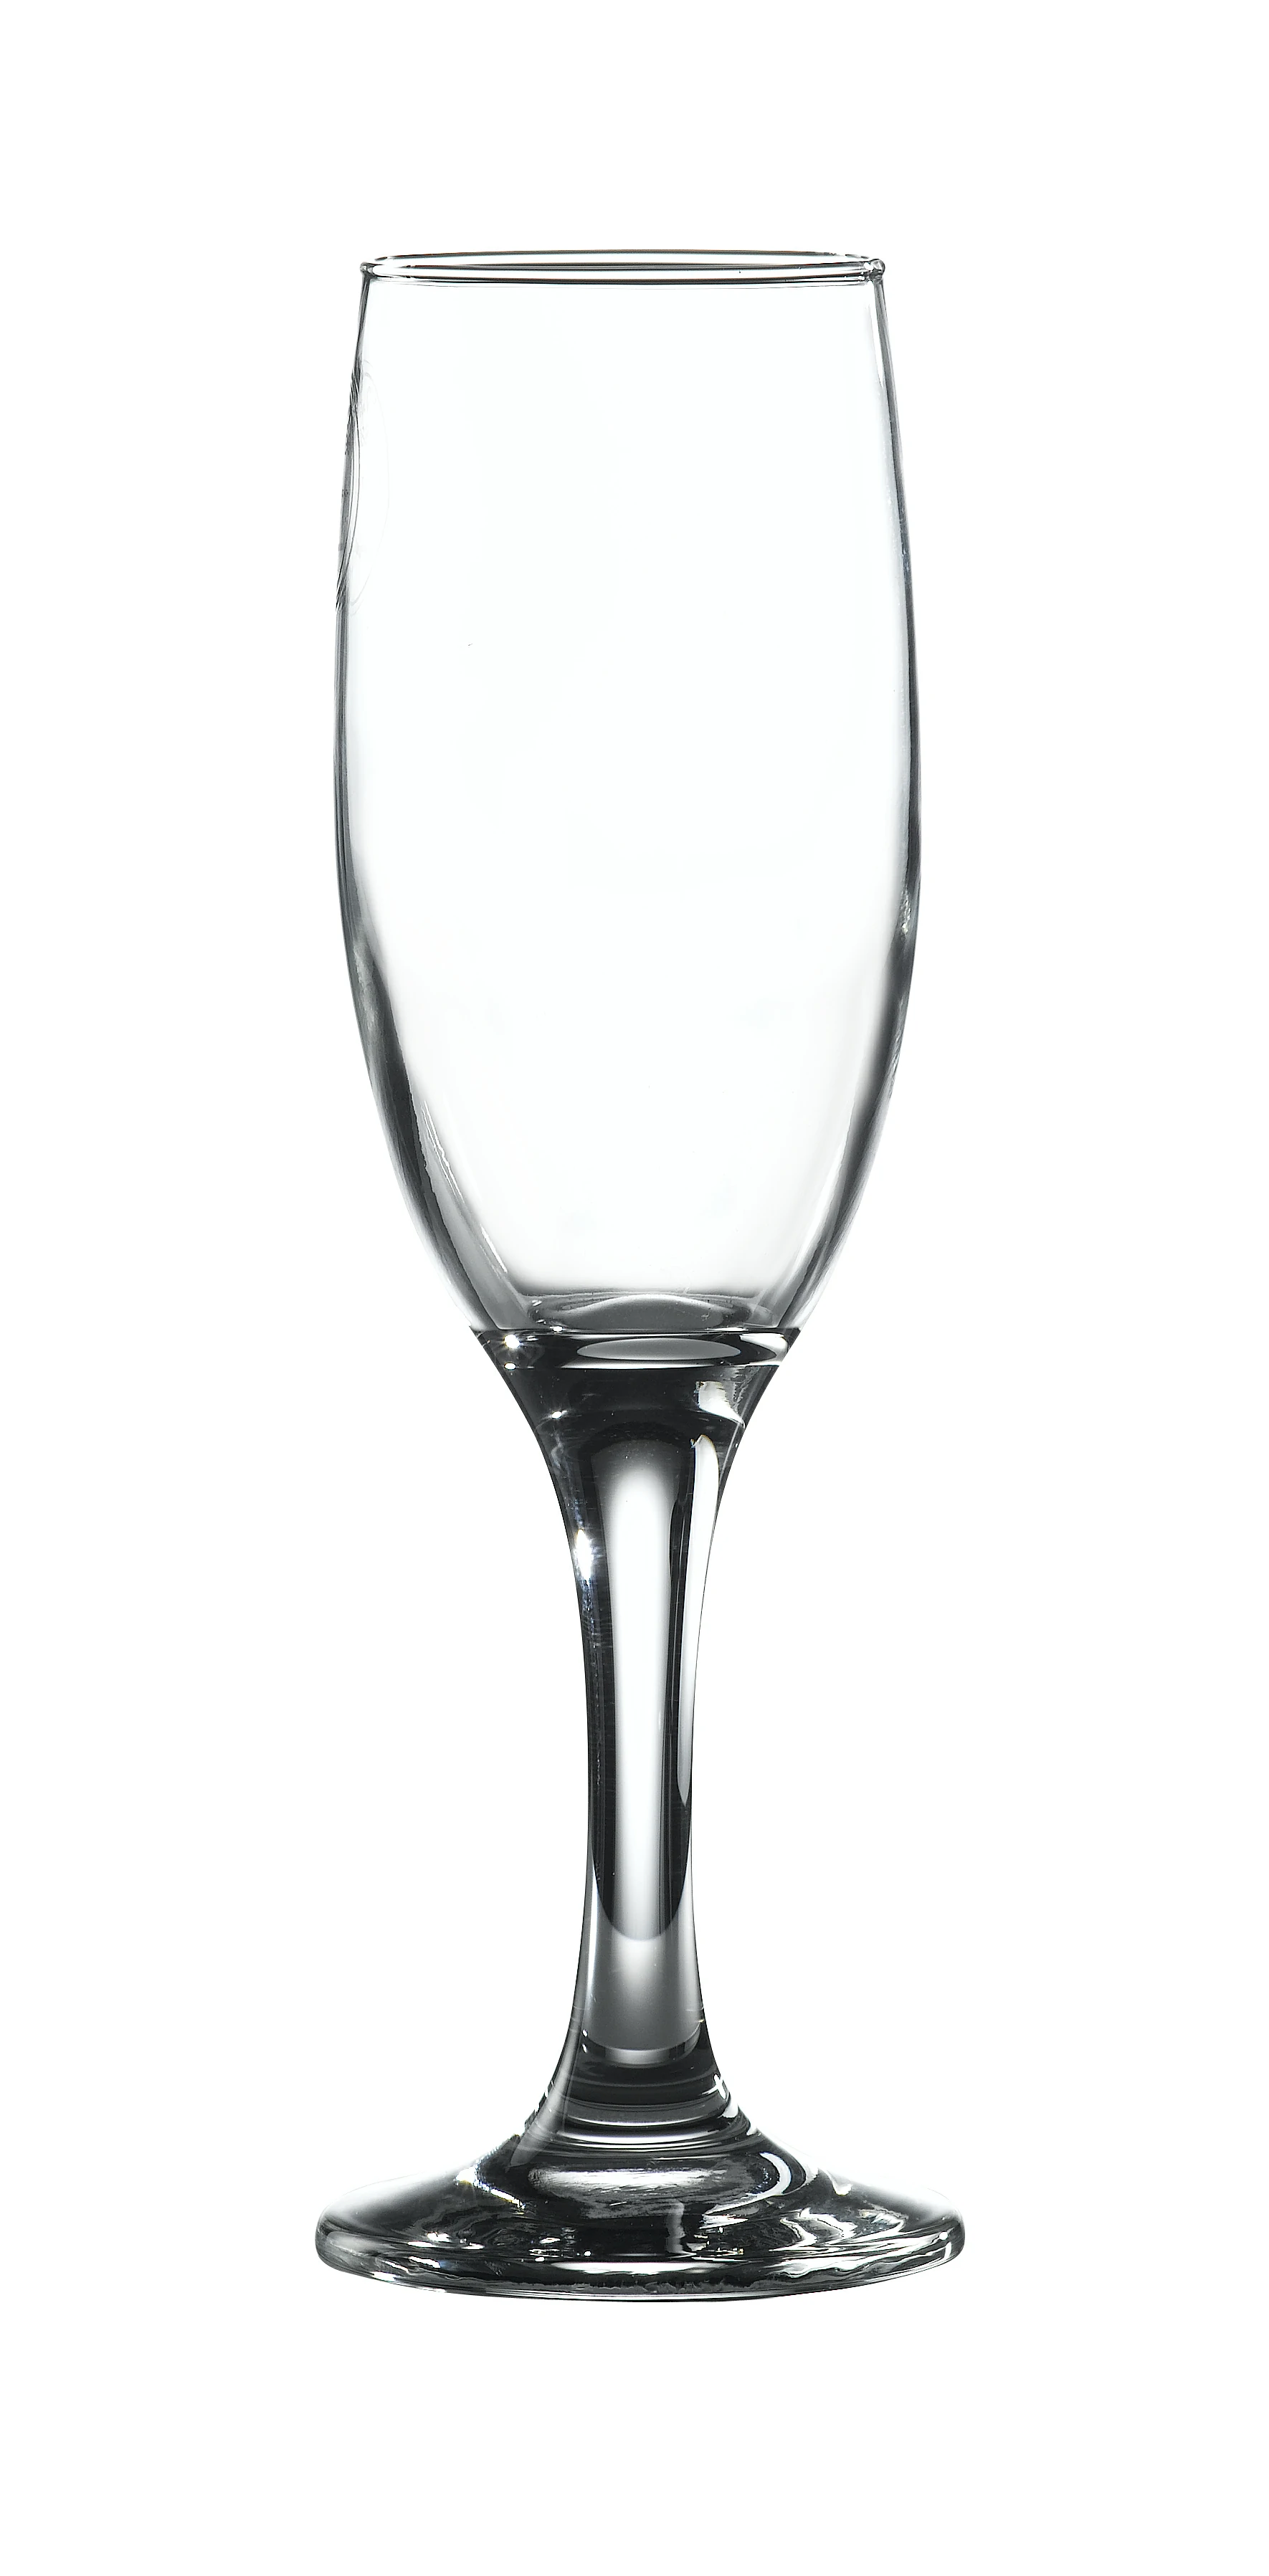 Misket/Empire Champagne Flute 19cl / 6.5oz